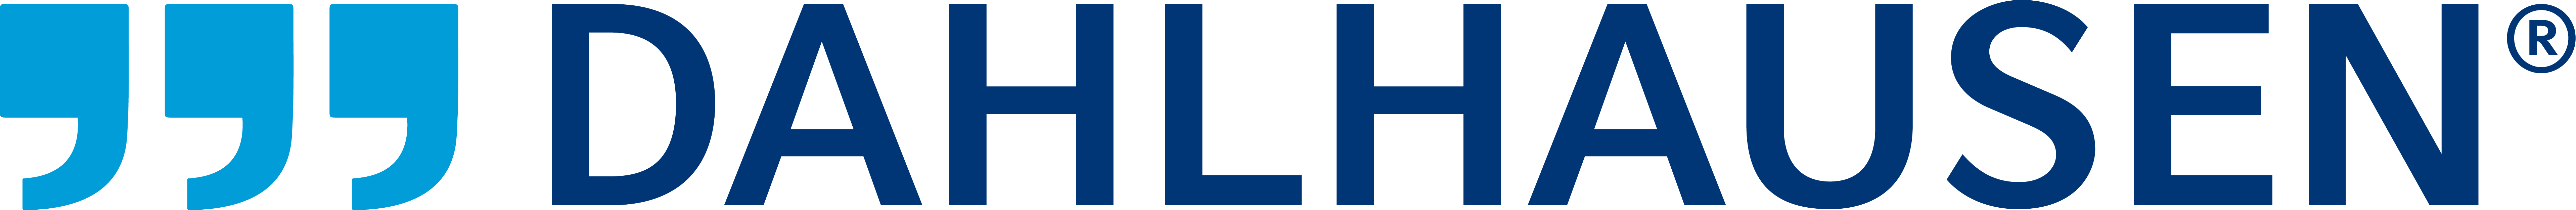 Logo P. J. Dahlhausen & Co. GmbH 